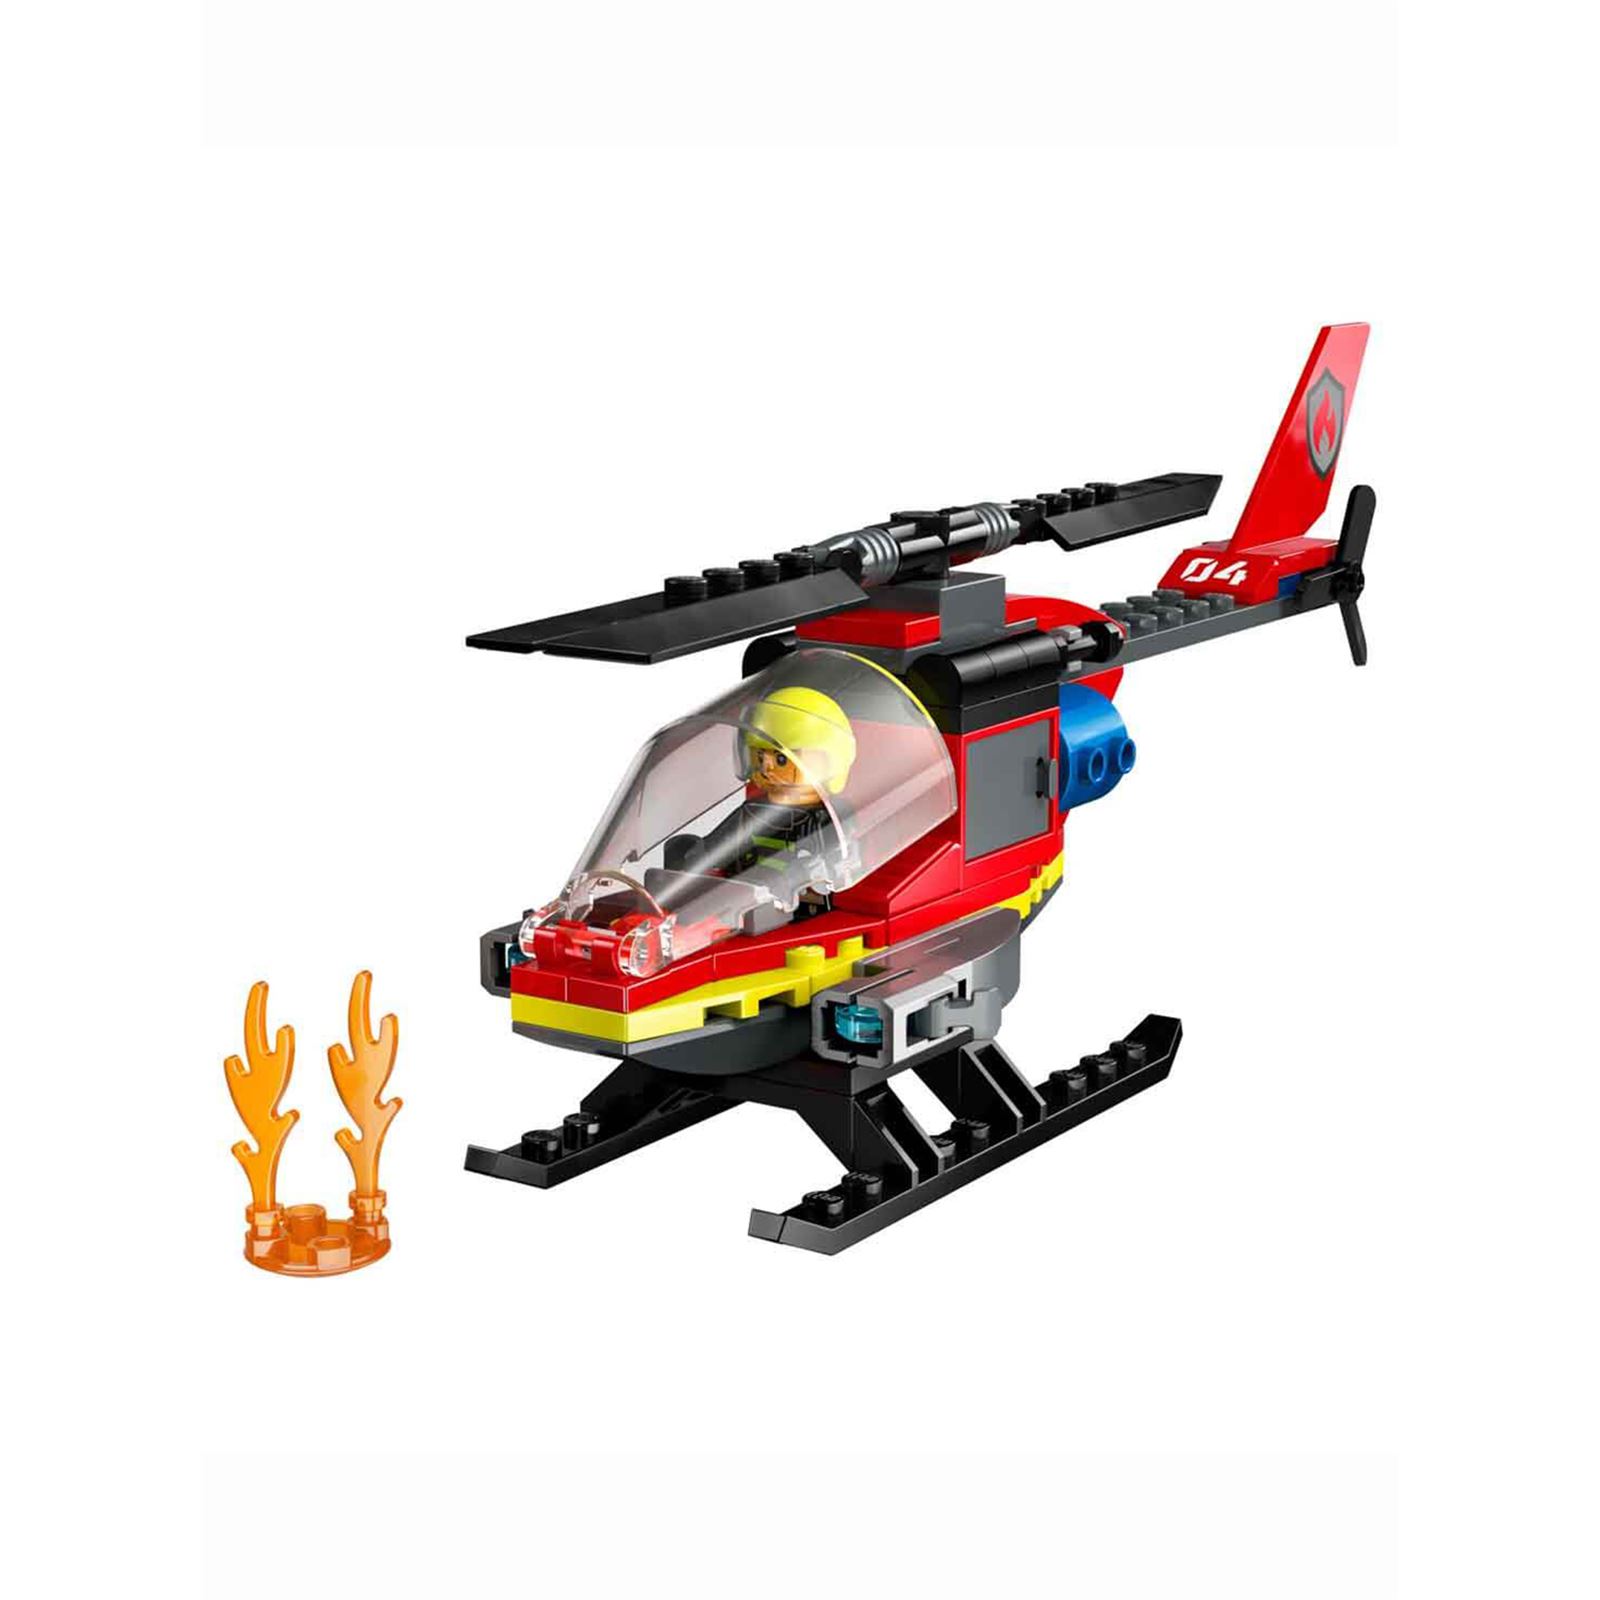 Lego İtfaiye Kurtarma Helikopteri Siyah